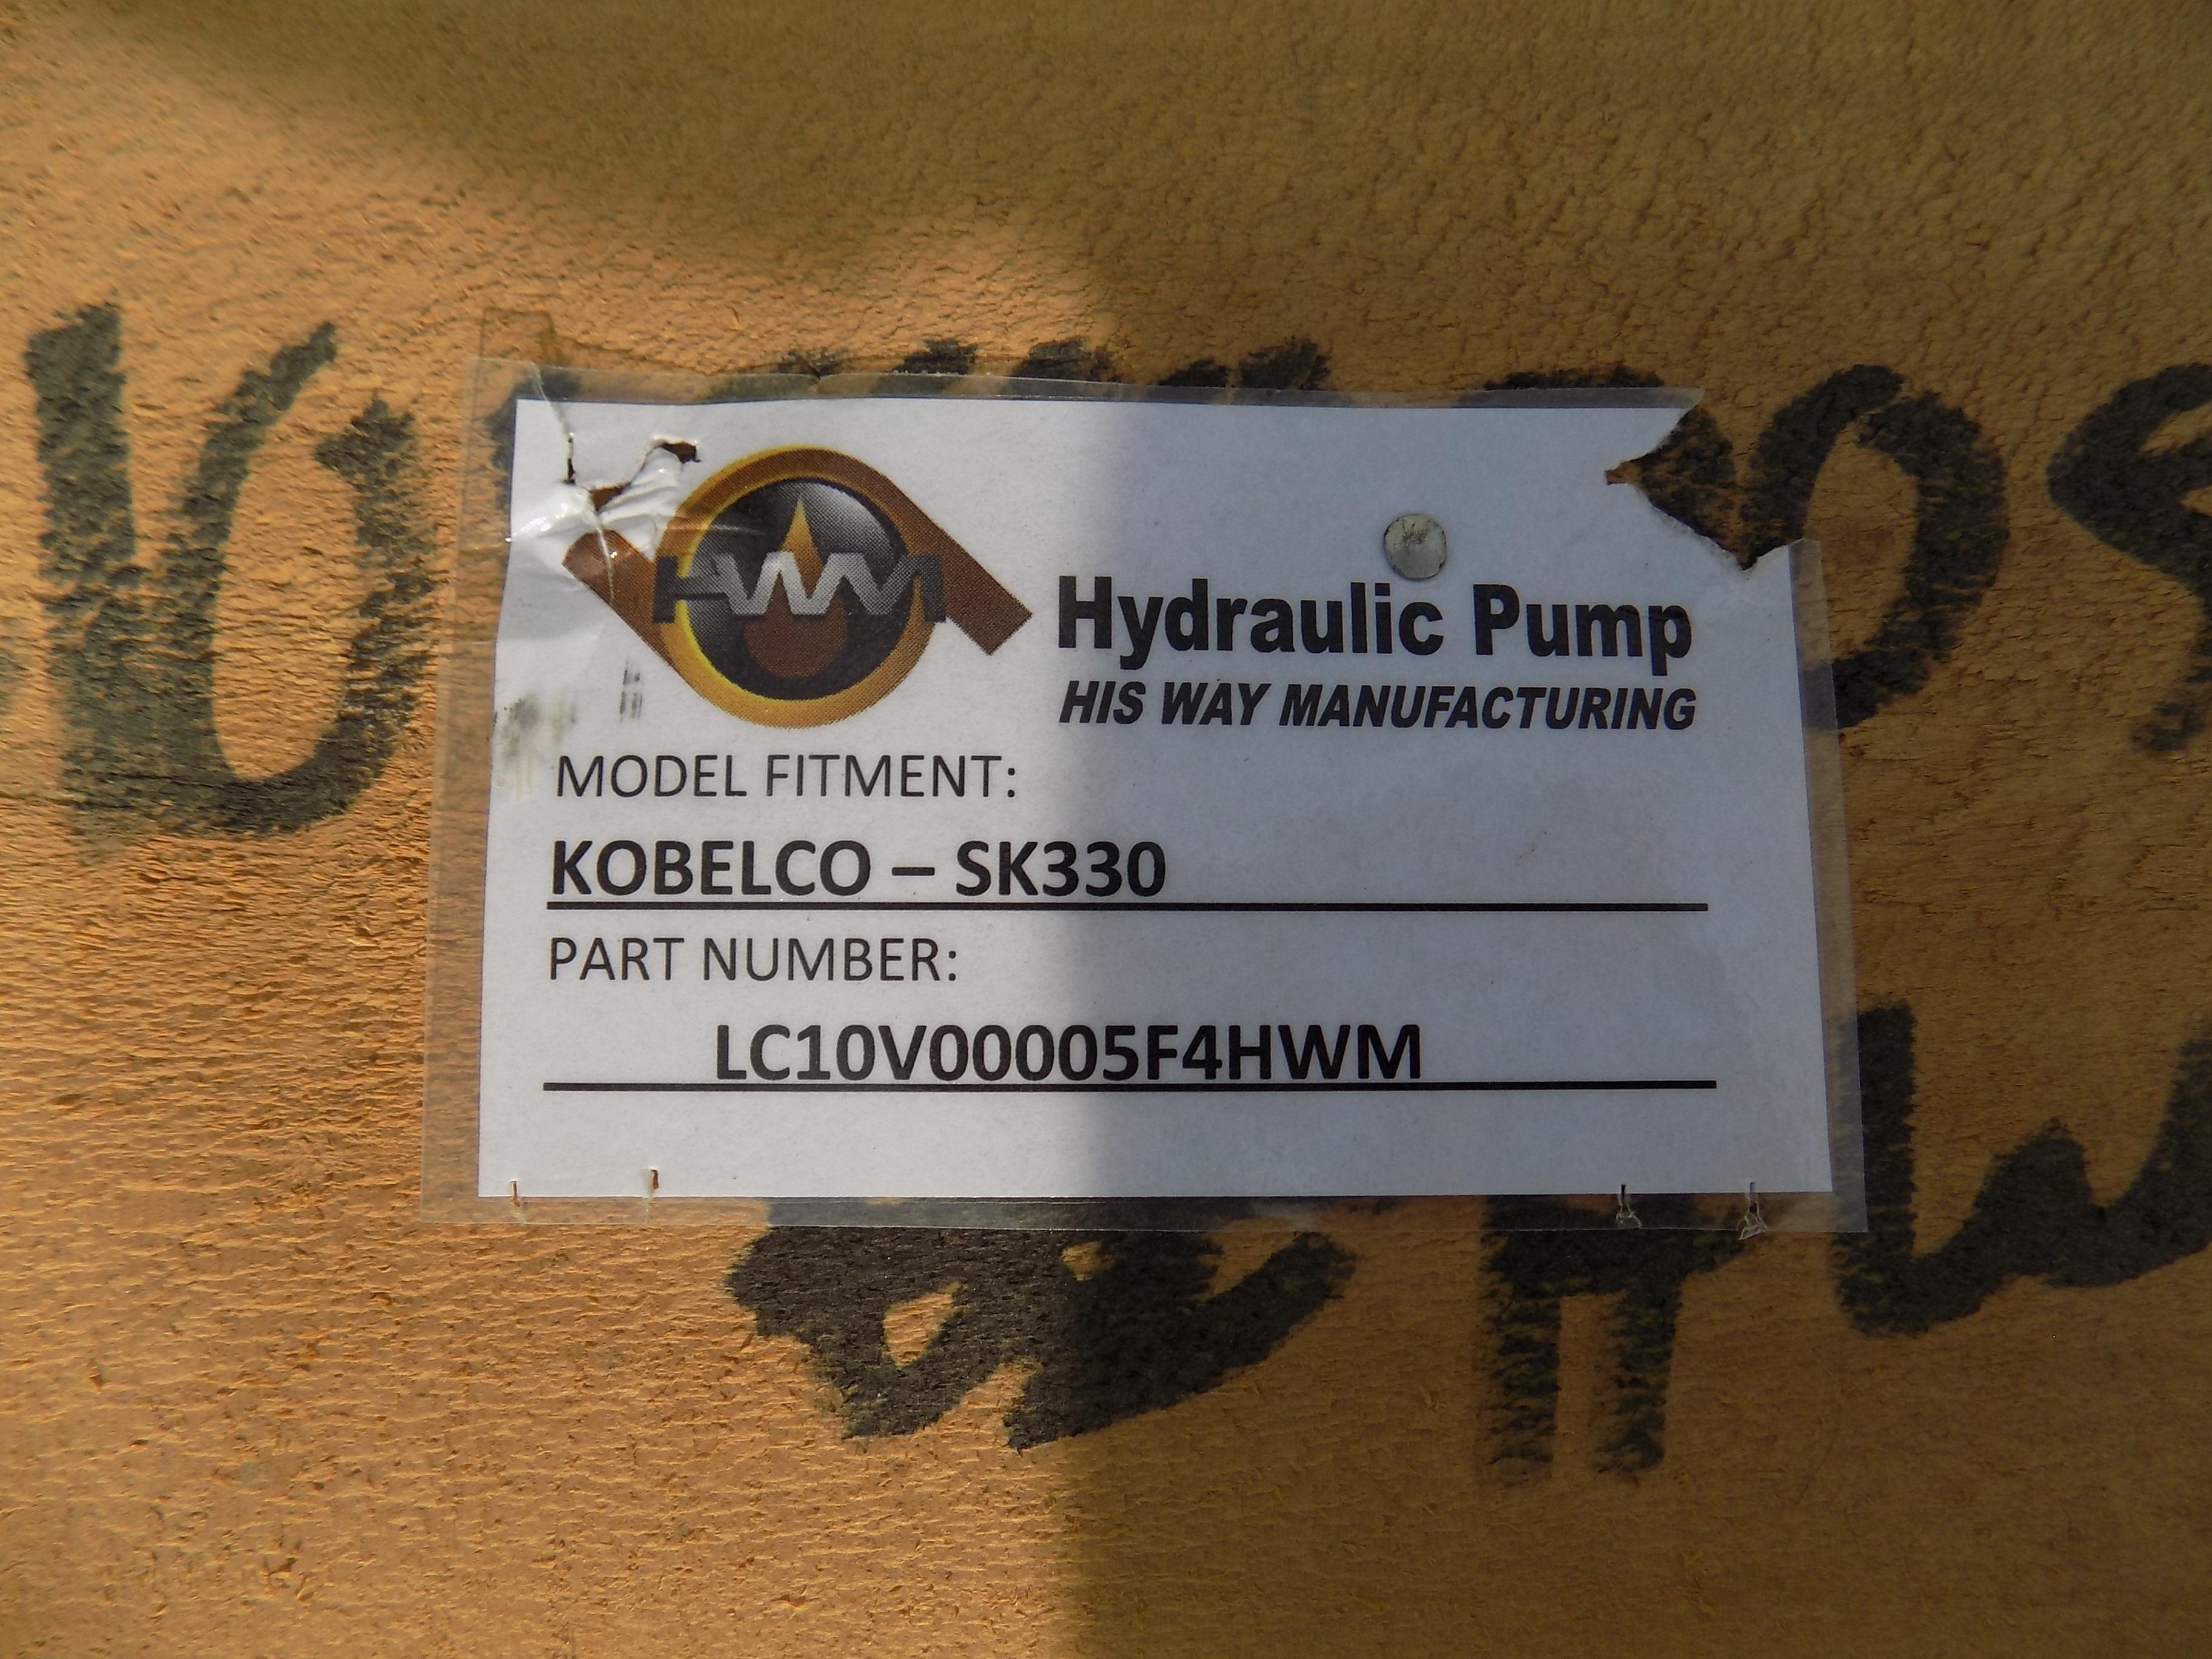 His Way Manufacturing Hyrdaulic Pump Fitment Model Kobelco-SK330